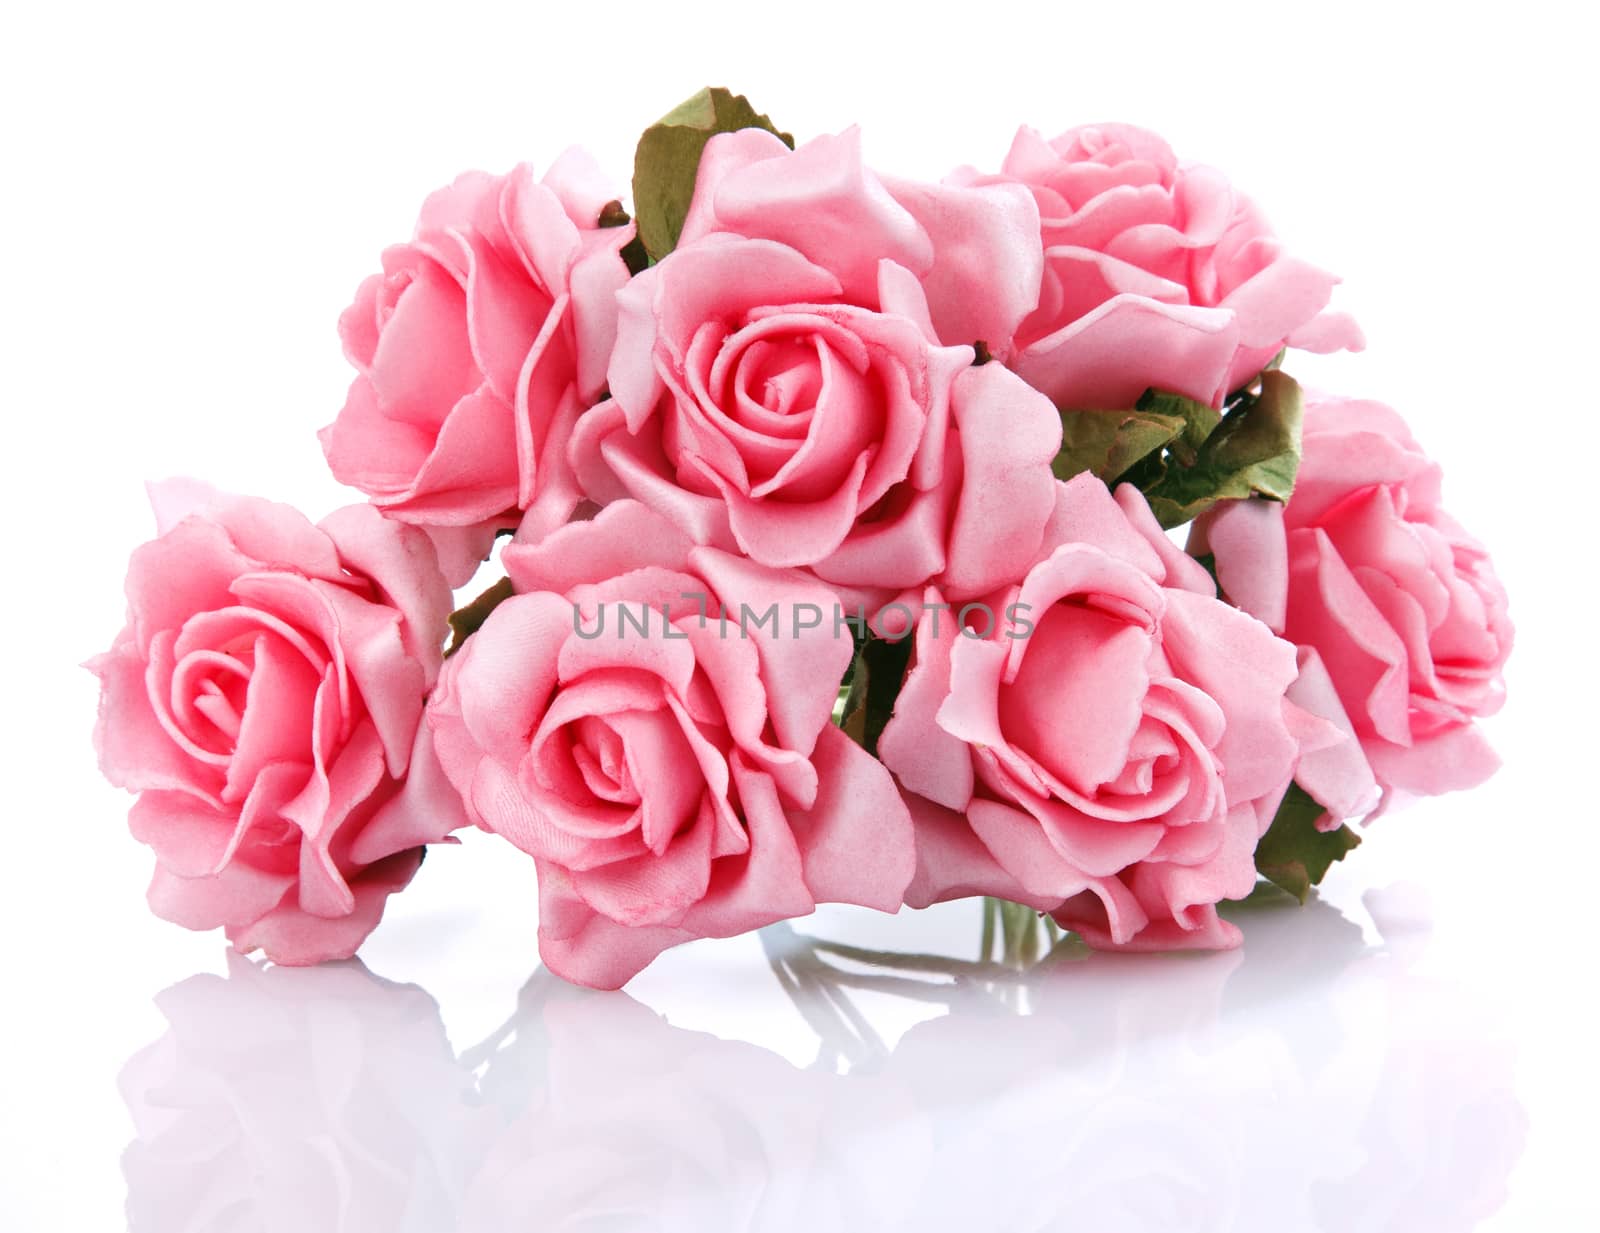  bouquet of pink roses by serkucher